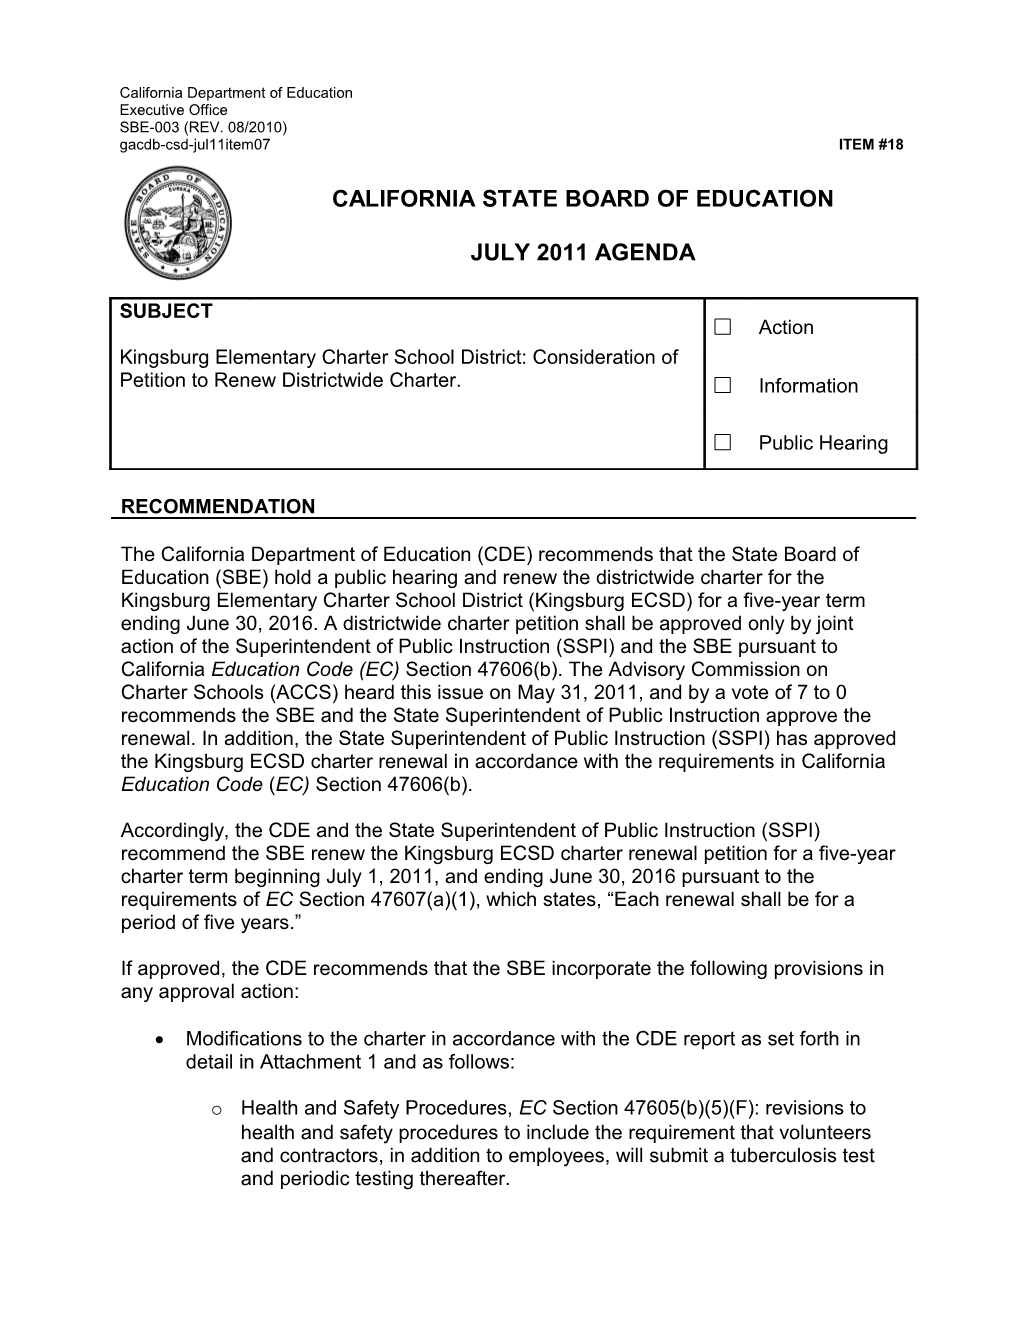 July 2011 Agenda Item 18 - Meeting Agendas (CA State Board of Education)